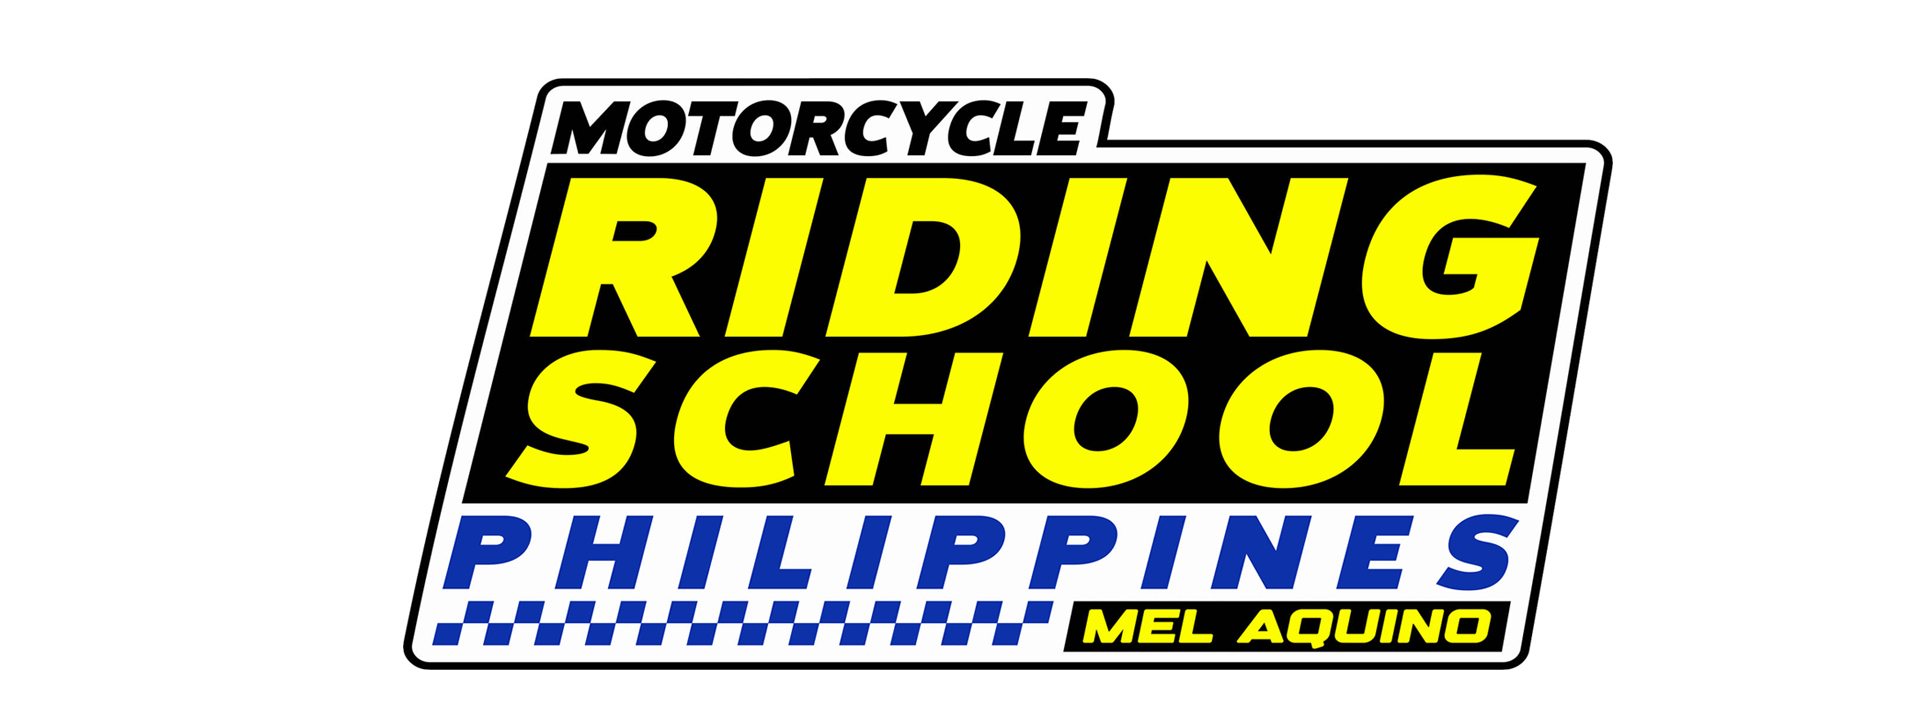 Mel Aquino Off Road Motorcycle Driving School